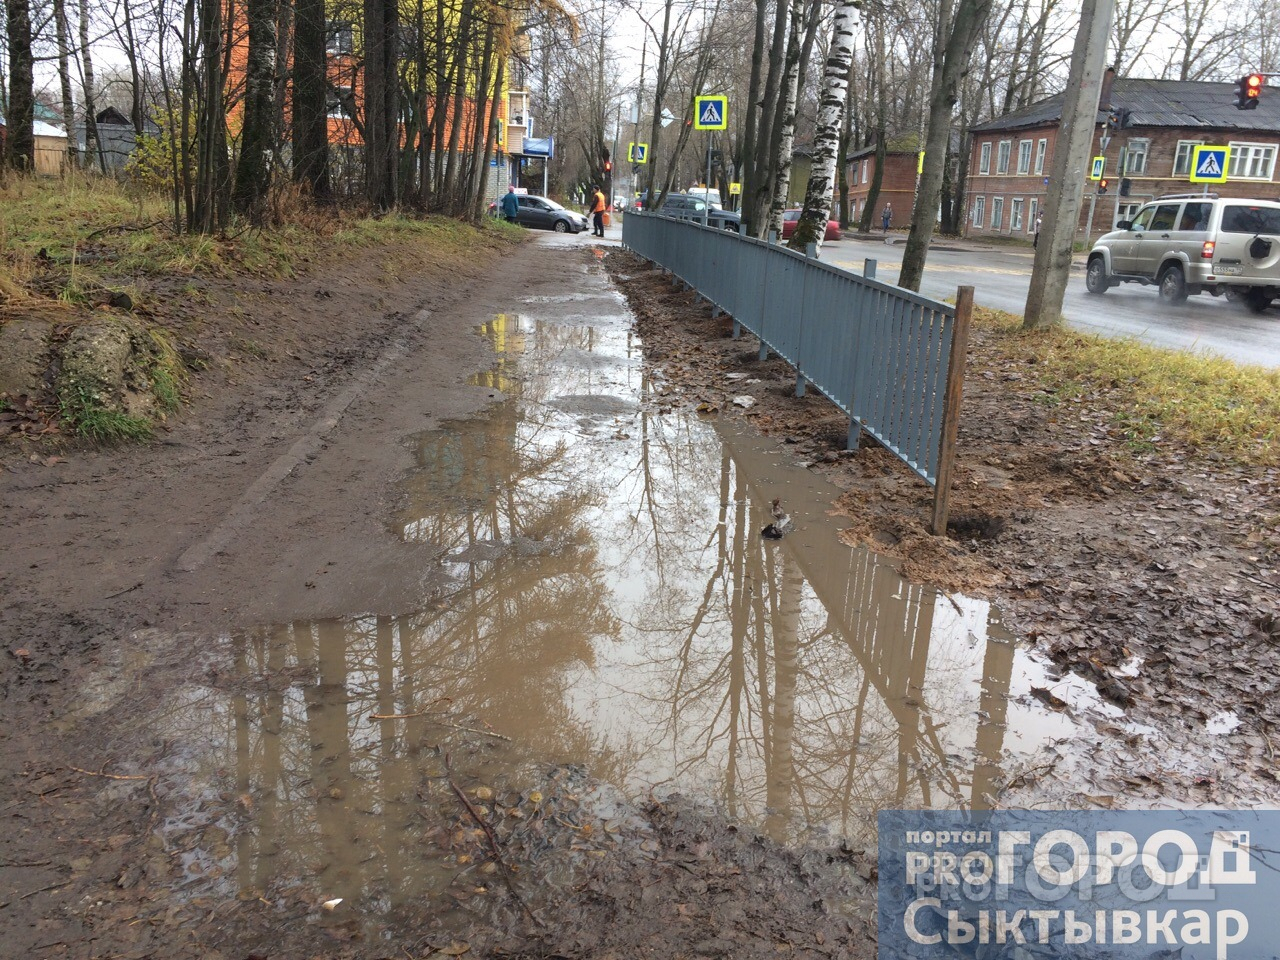 Сыктывкарка: «Вместо нового тротуара поставили забор!»